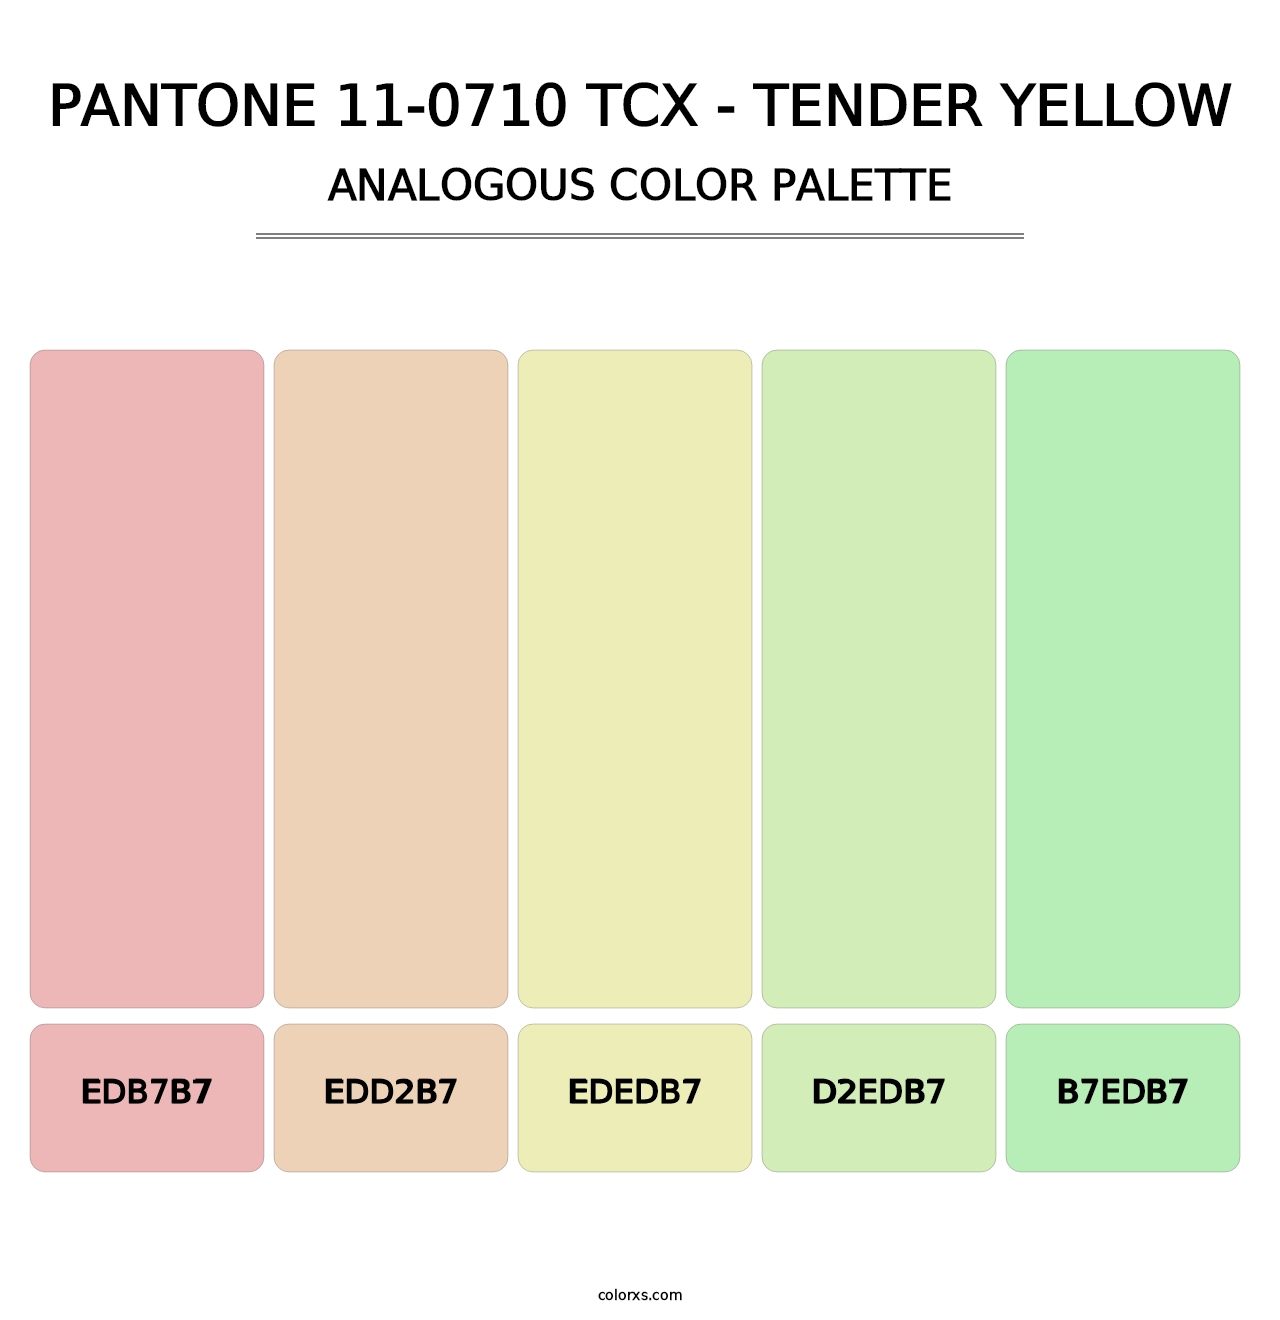 PANTONE 11-0710 TCX - Tender Yellow - Analogous Color Palette